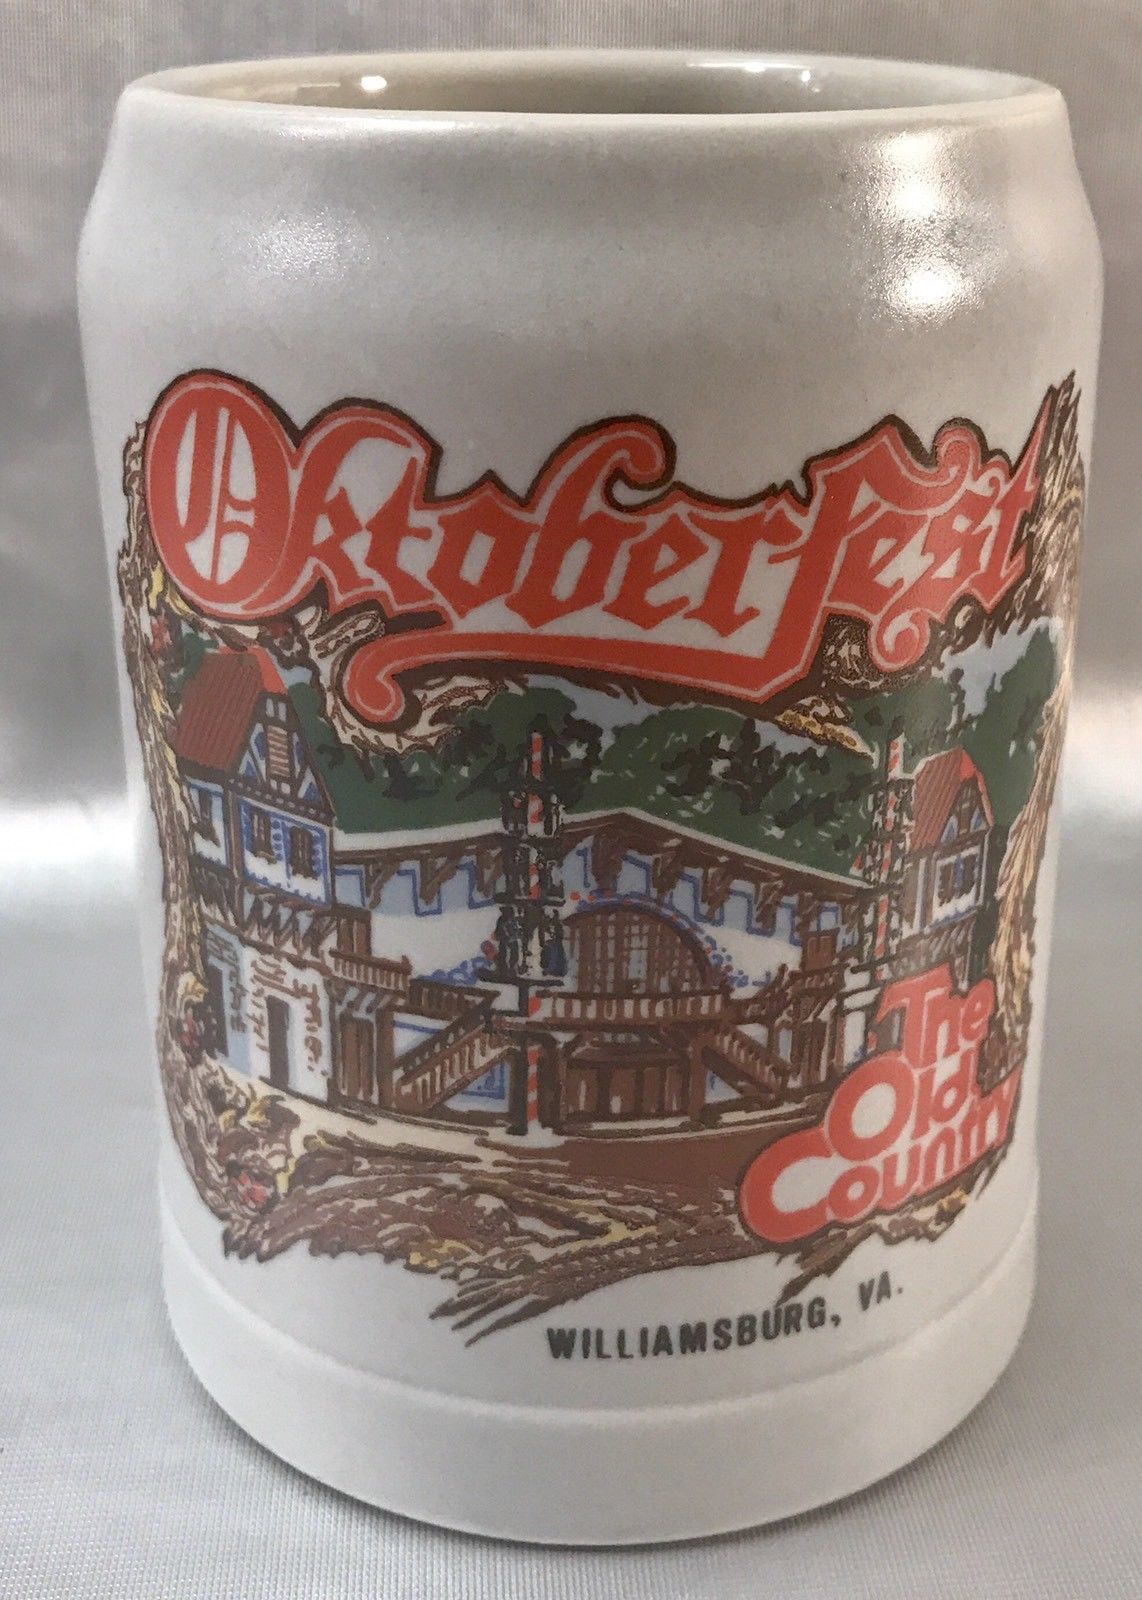 Oktoberfest Beer Stein Old Country Williamsburg, VA Ceramarte Ceramic Mug - $6.98